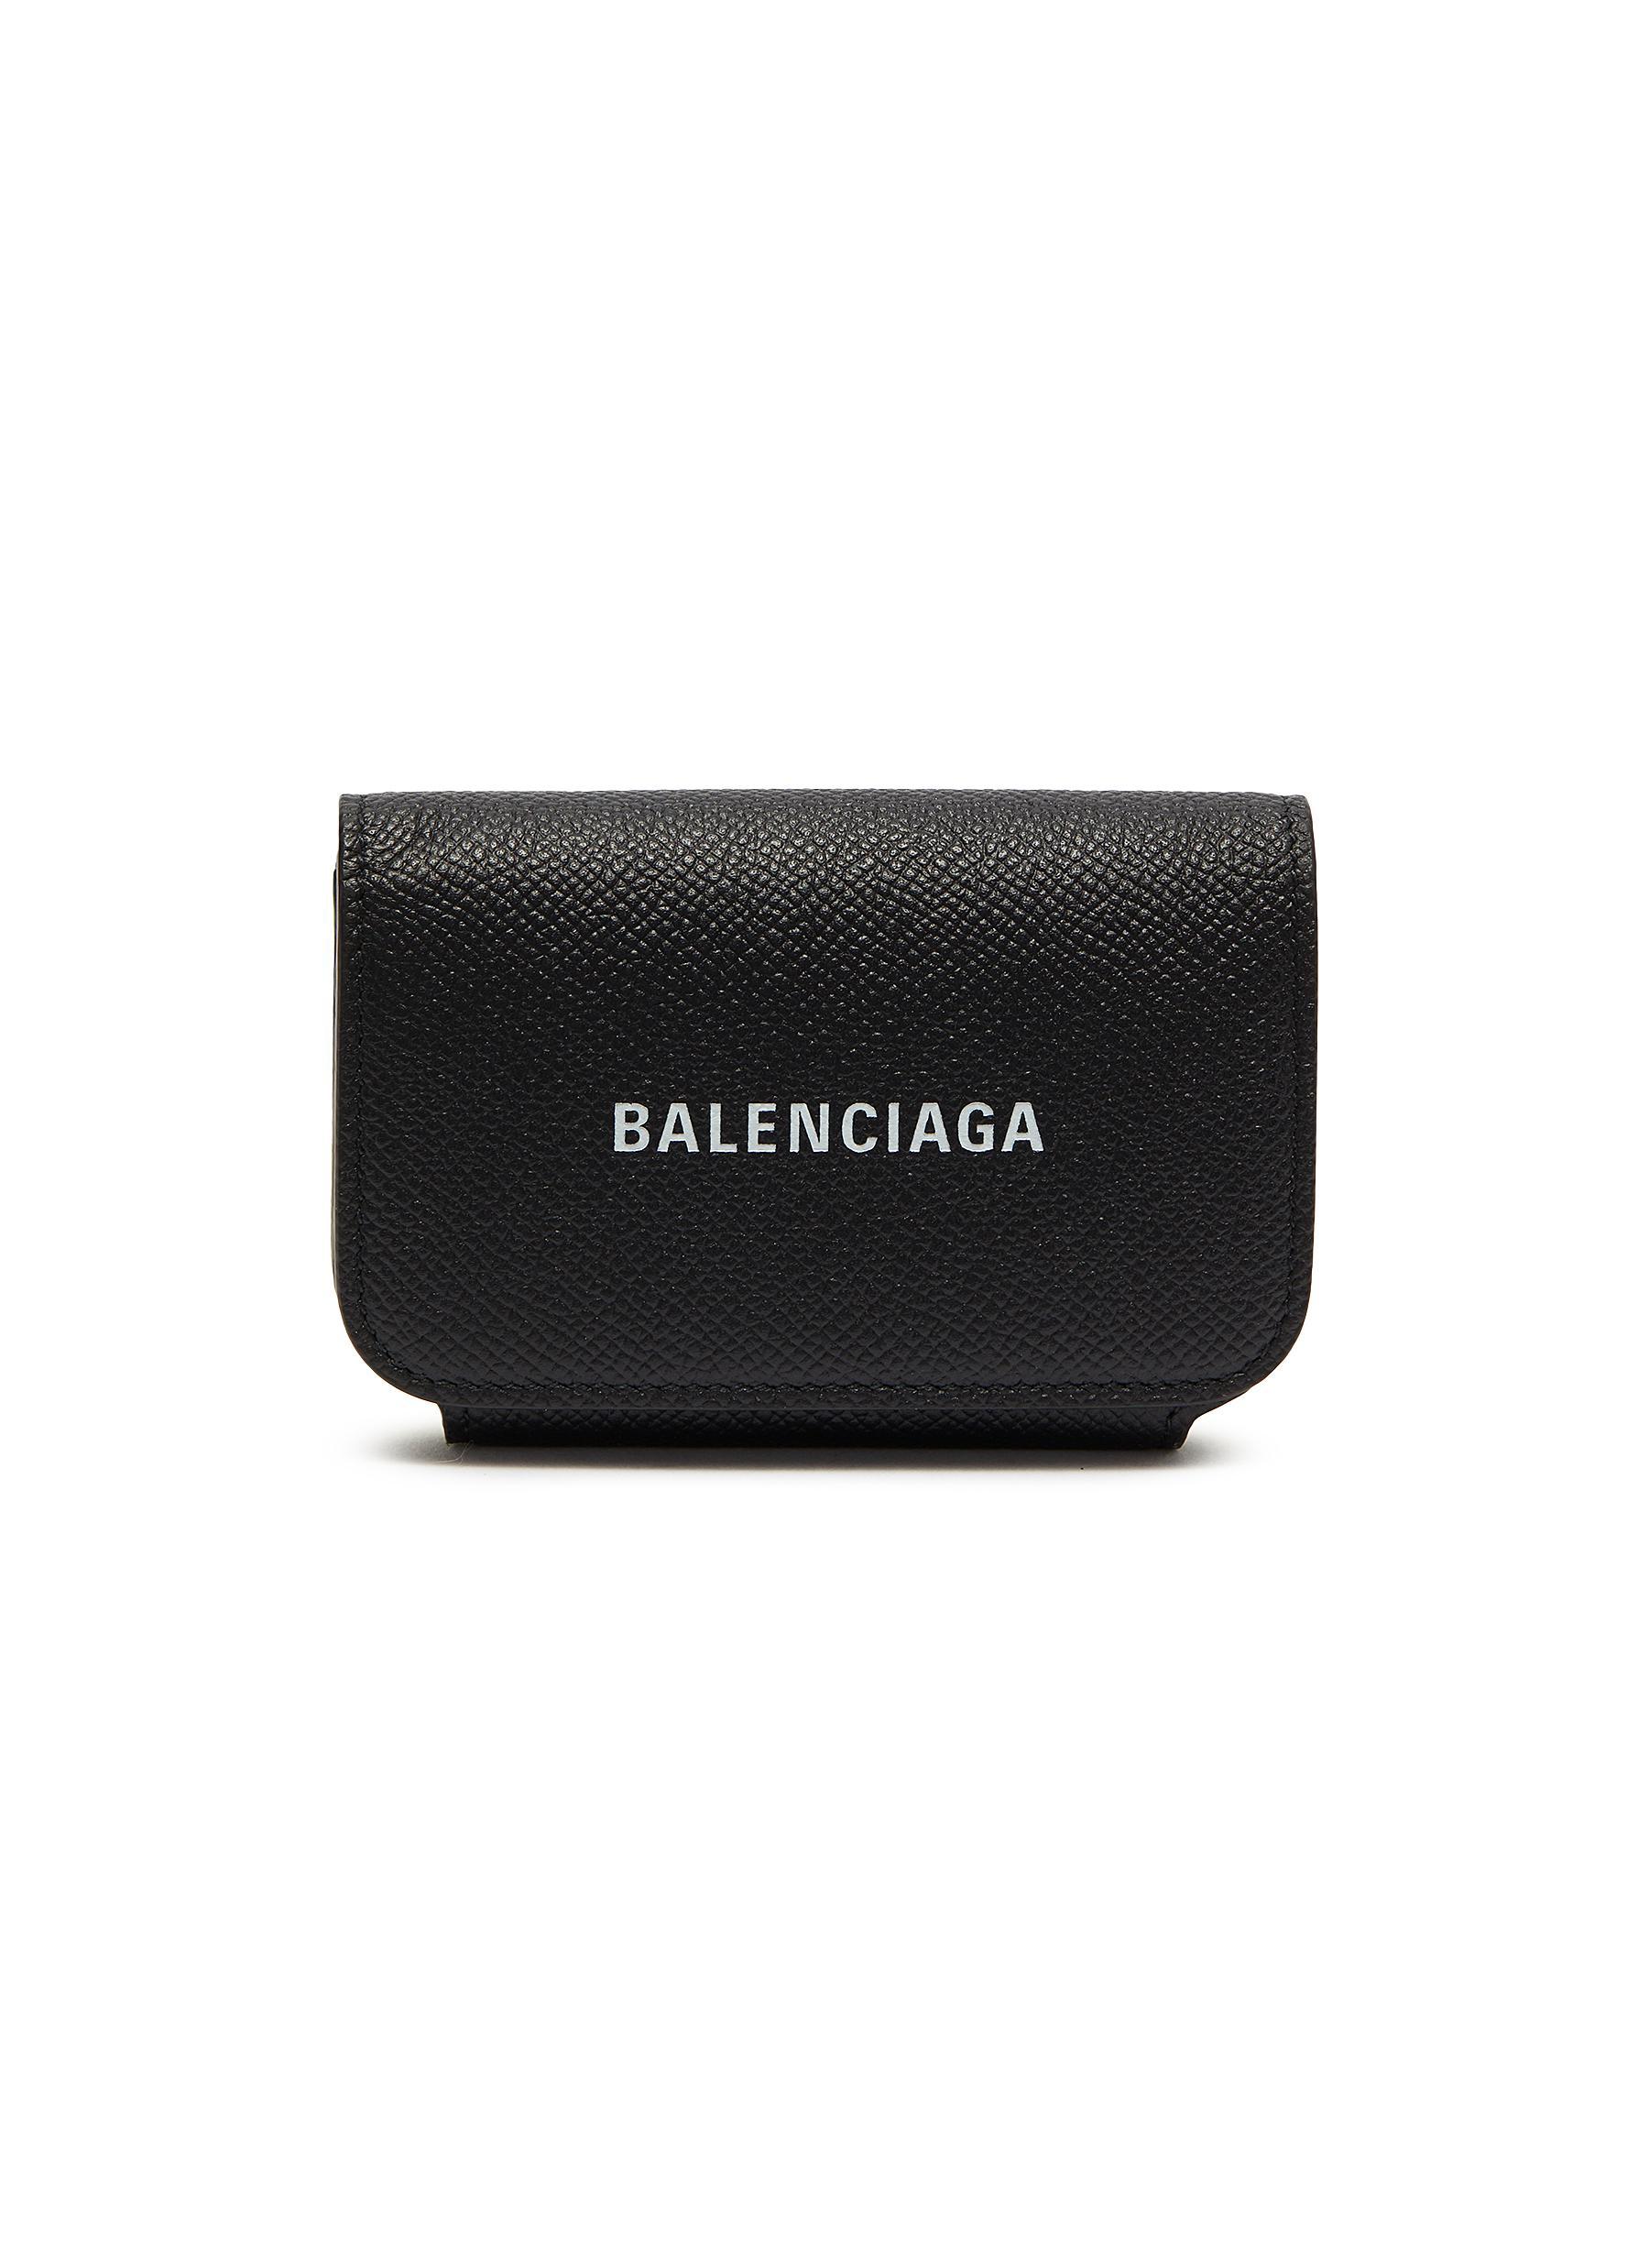 Balenciaga 'cash Accordeon' Logo Print Leather Wallet in Black | Lyst